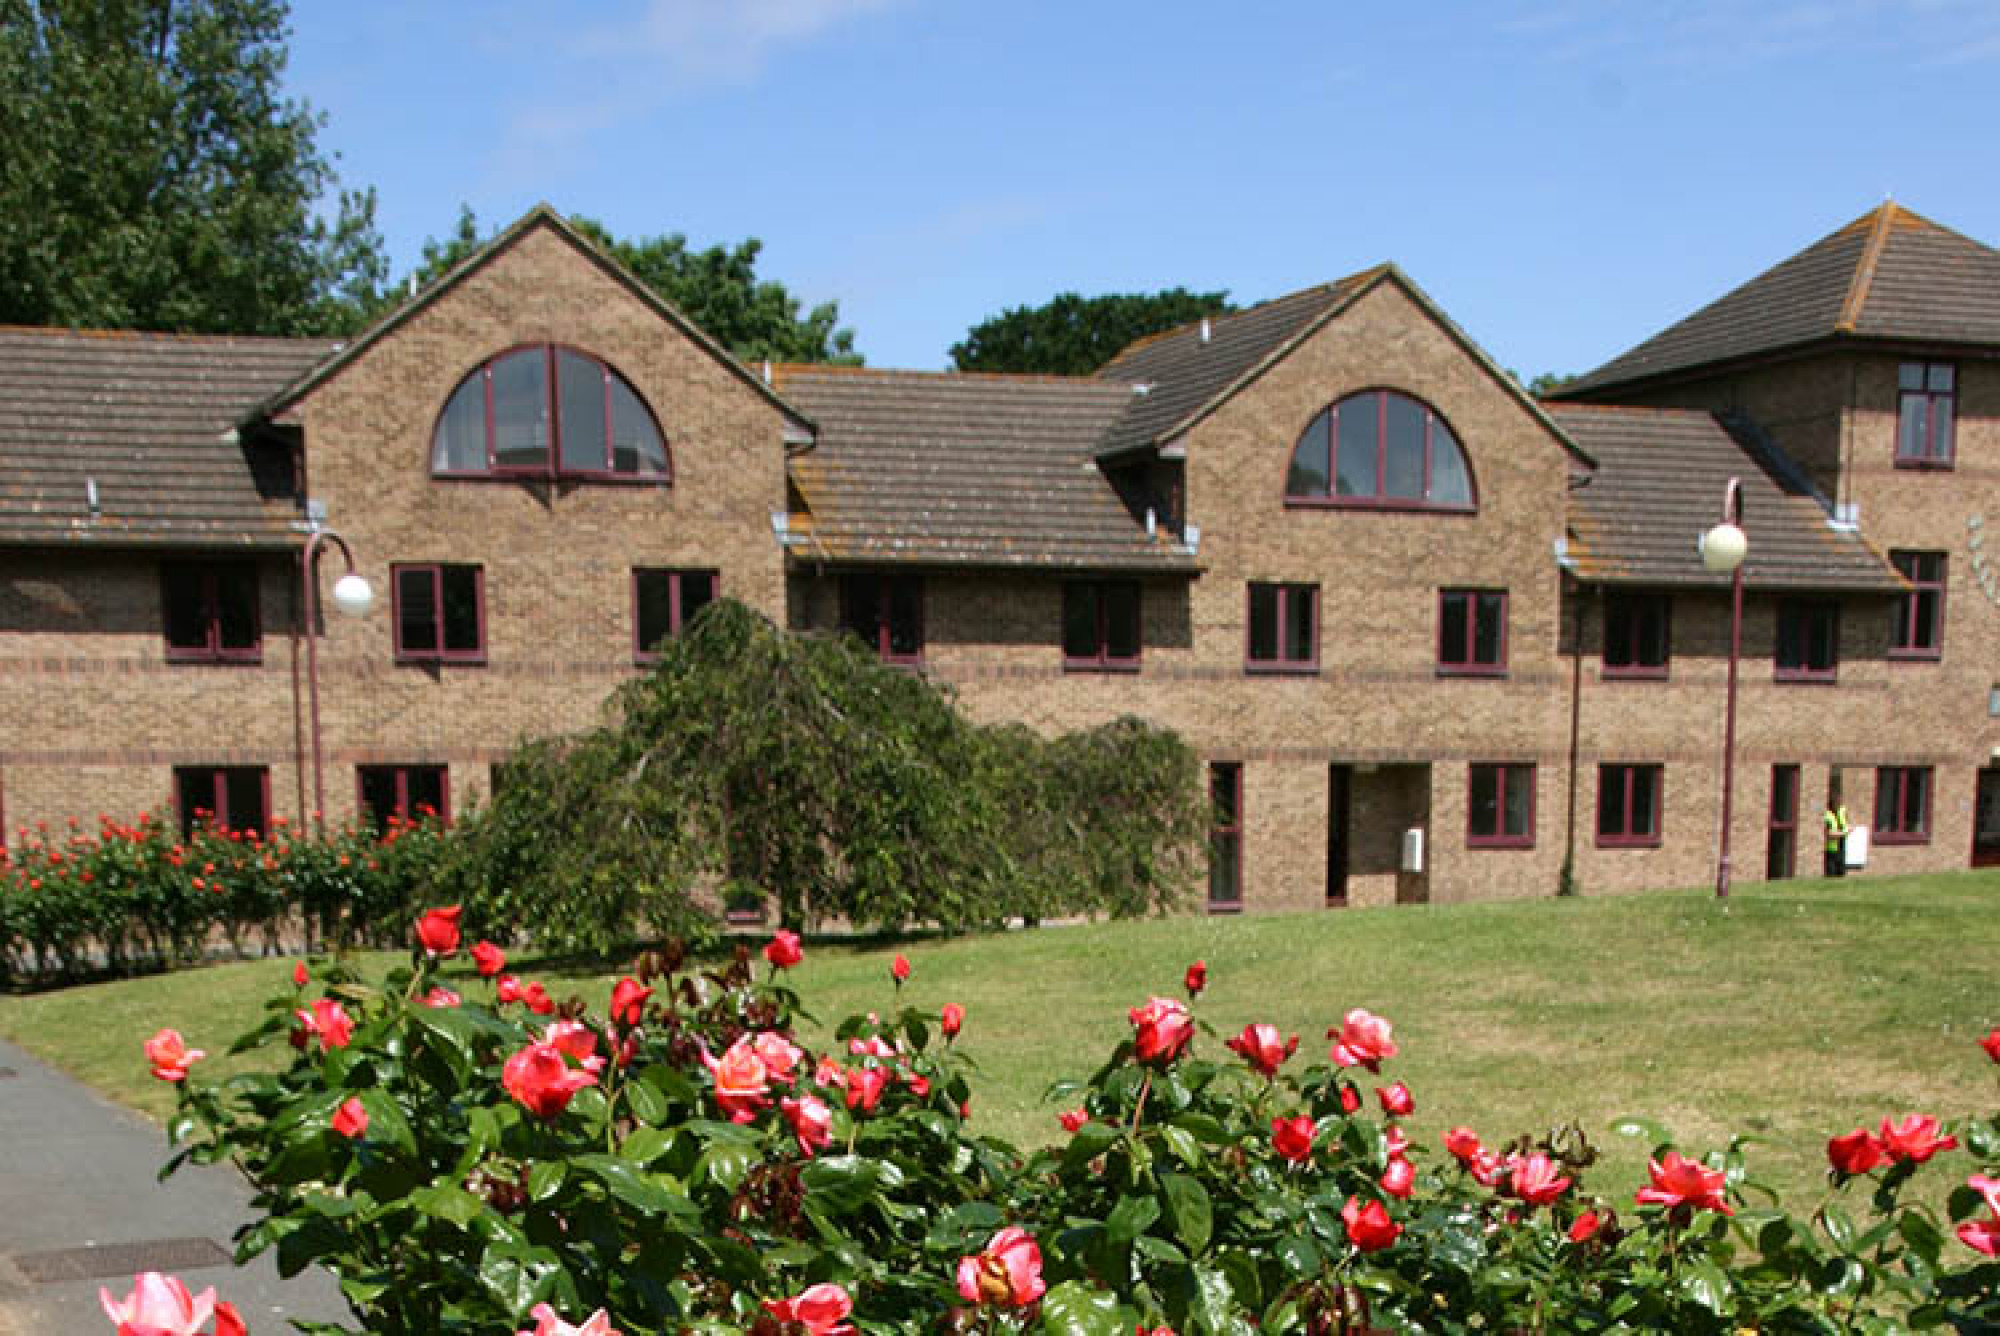 Darwin Houses exterior and rose garden